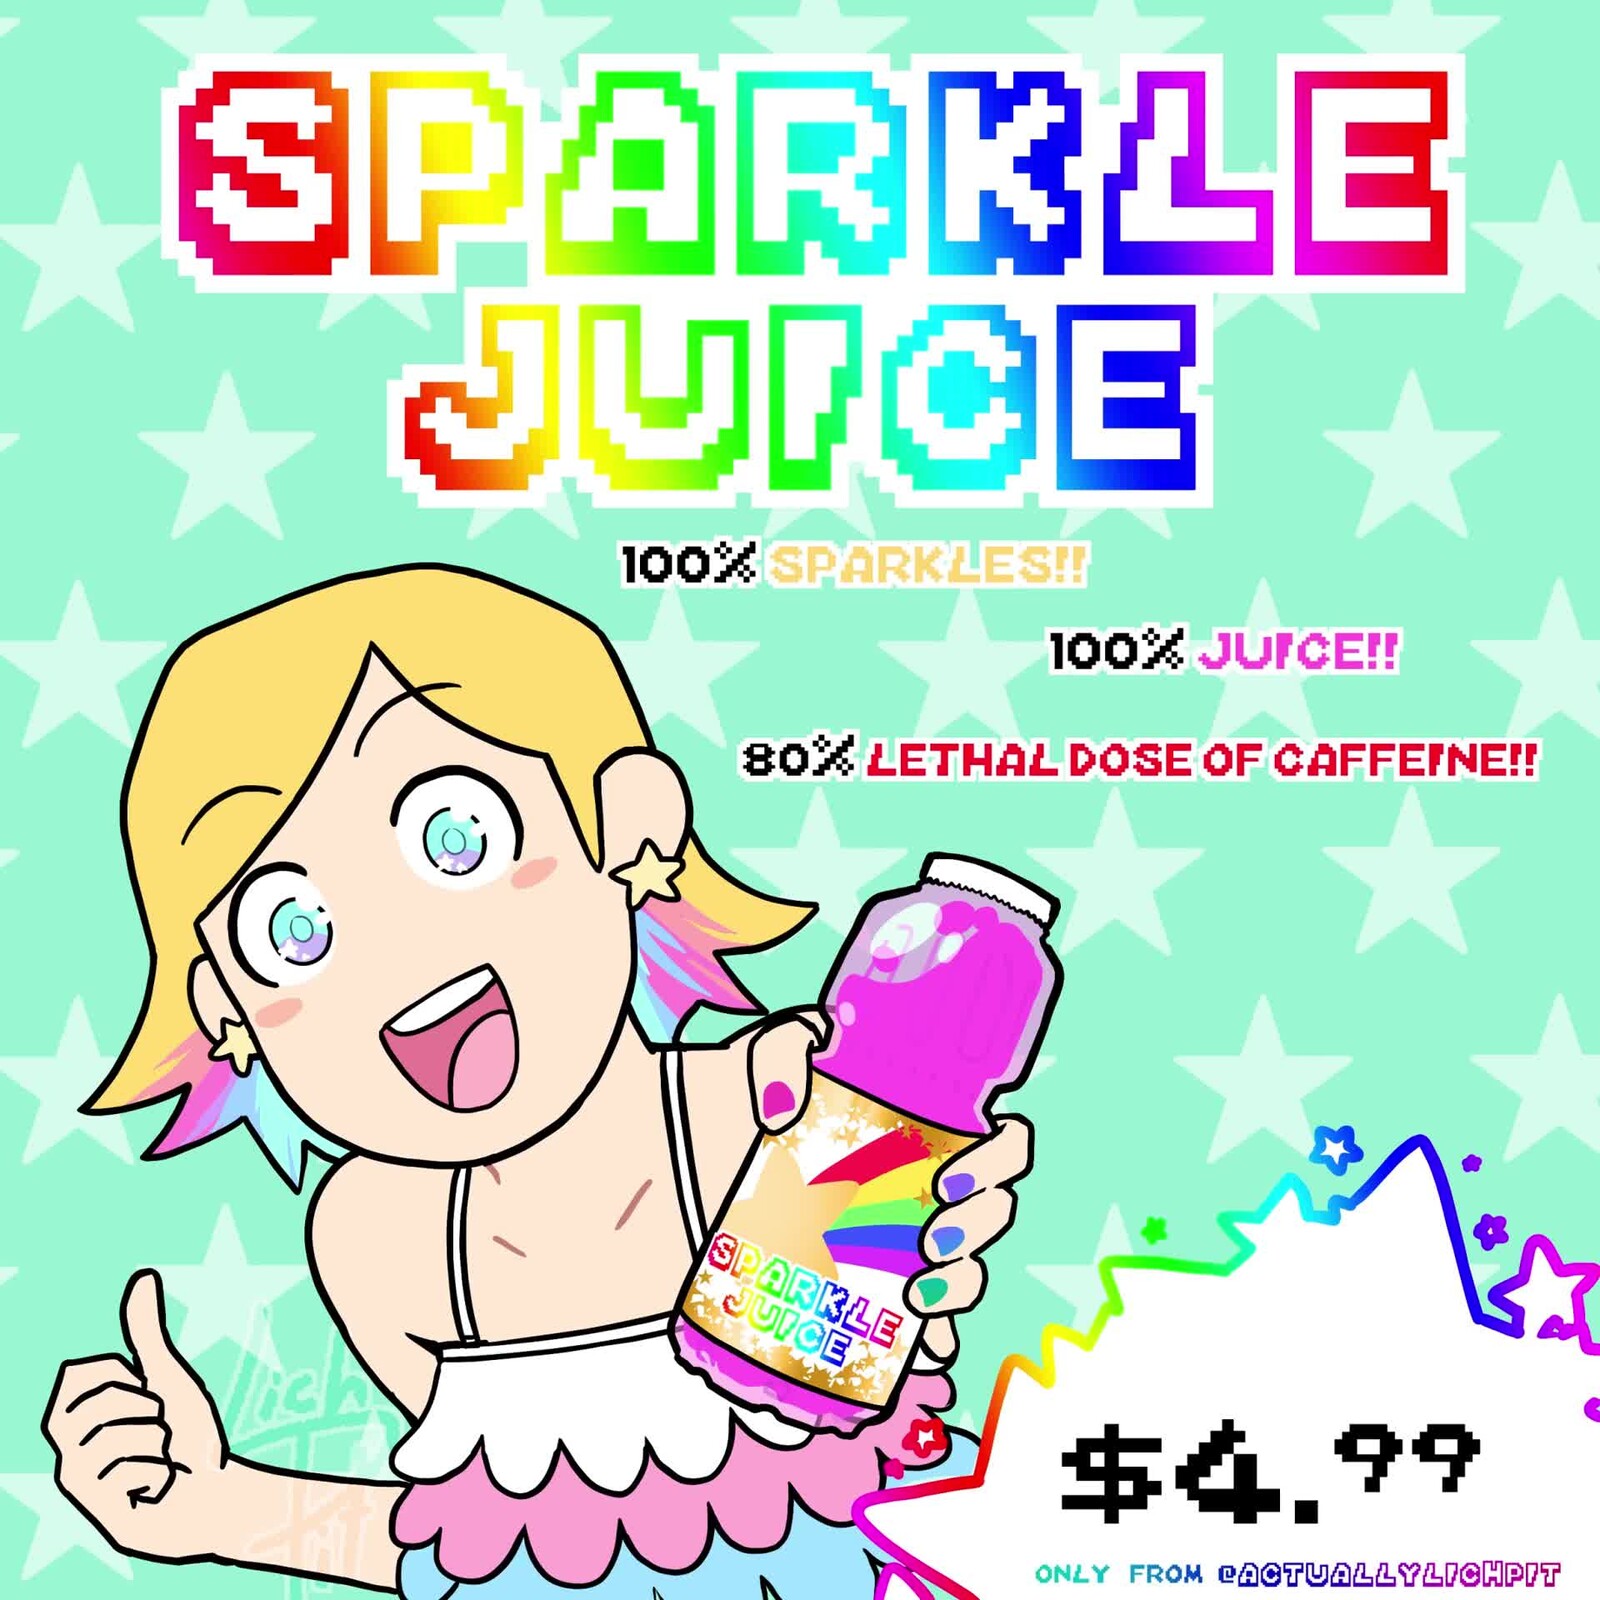 Sparkle Juice - 8 Frame Gif